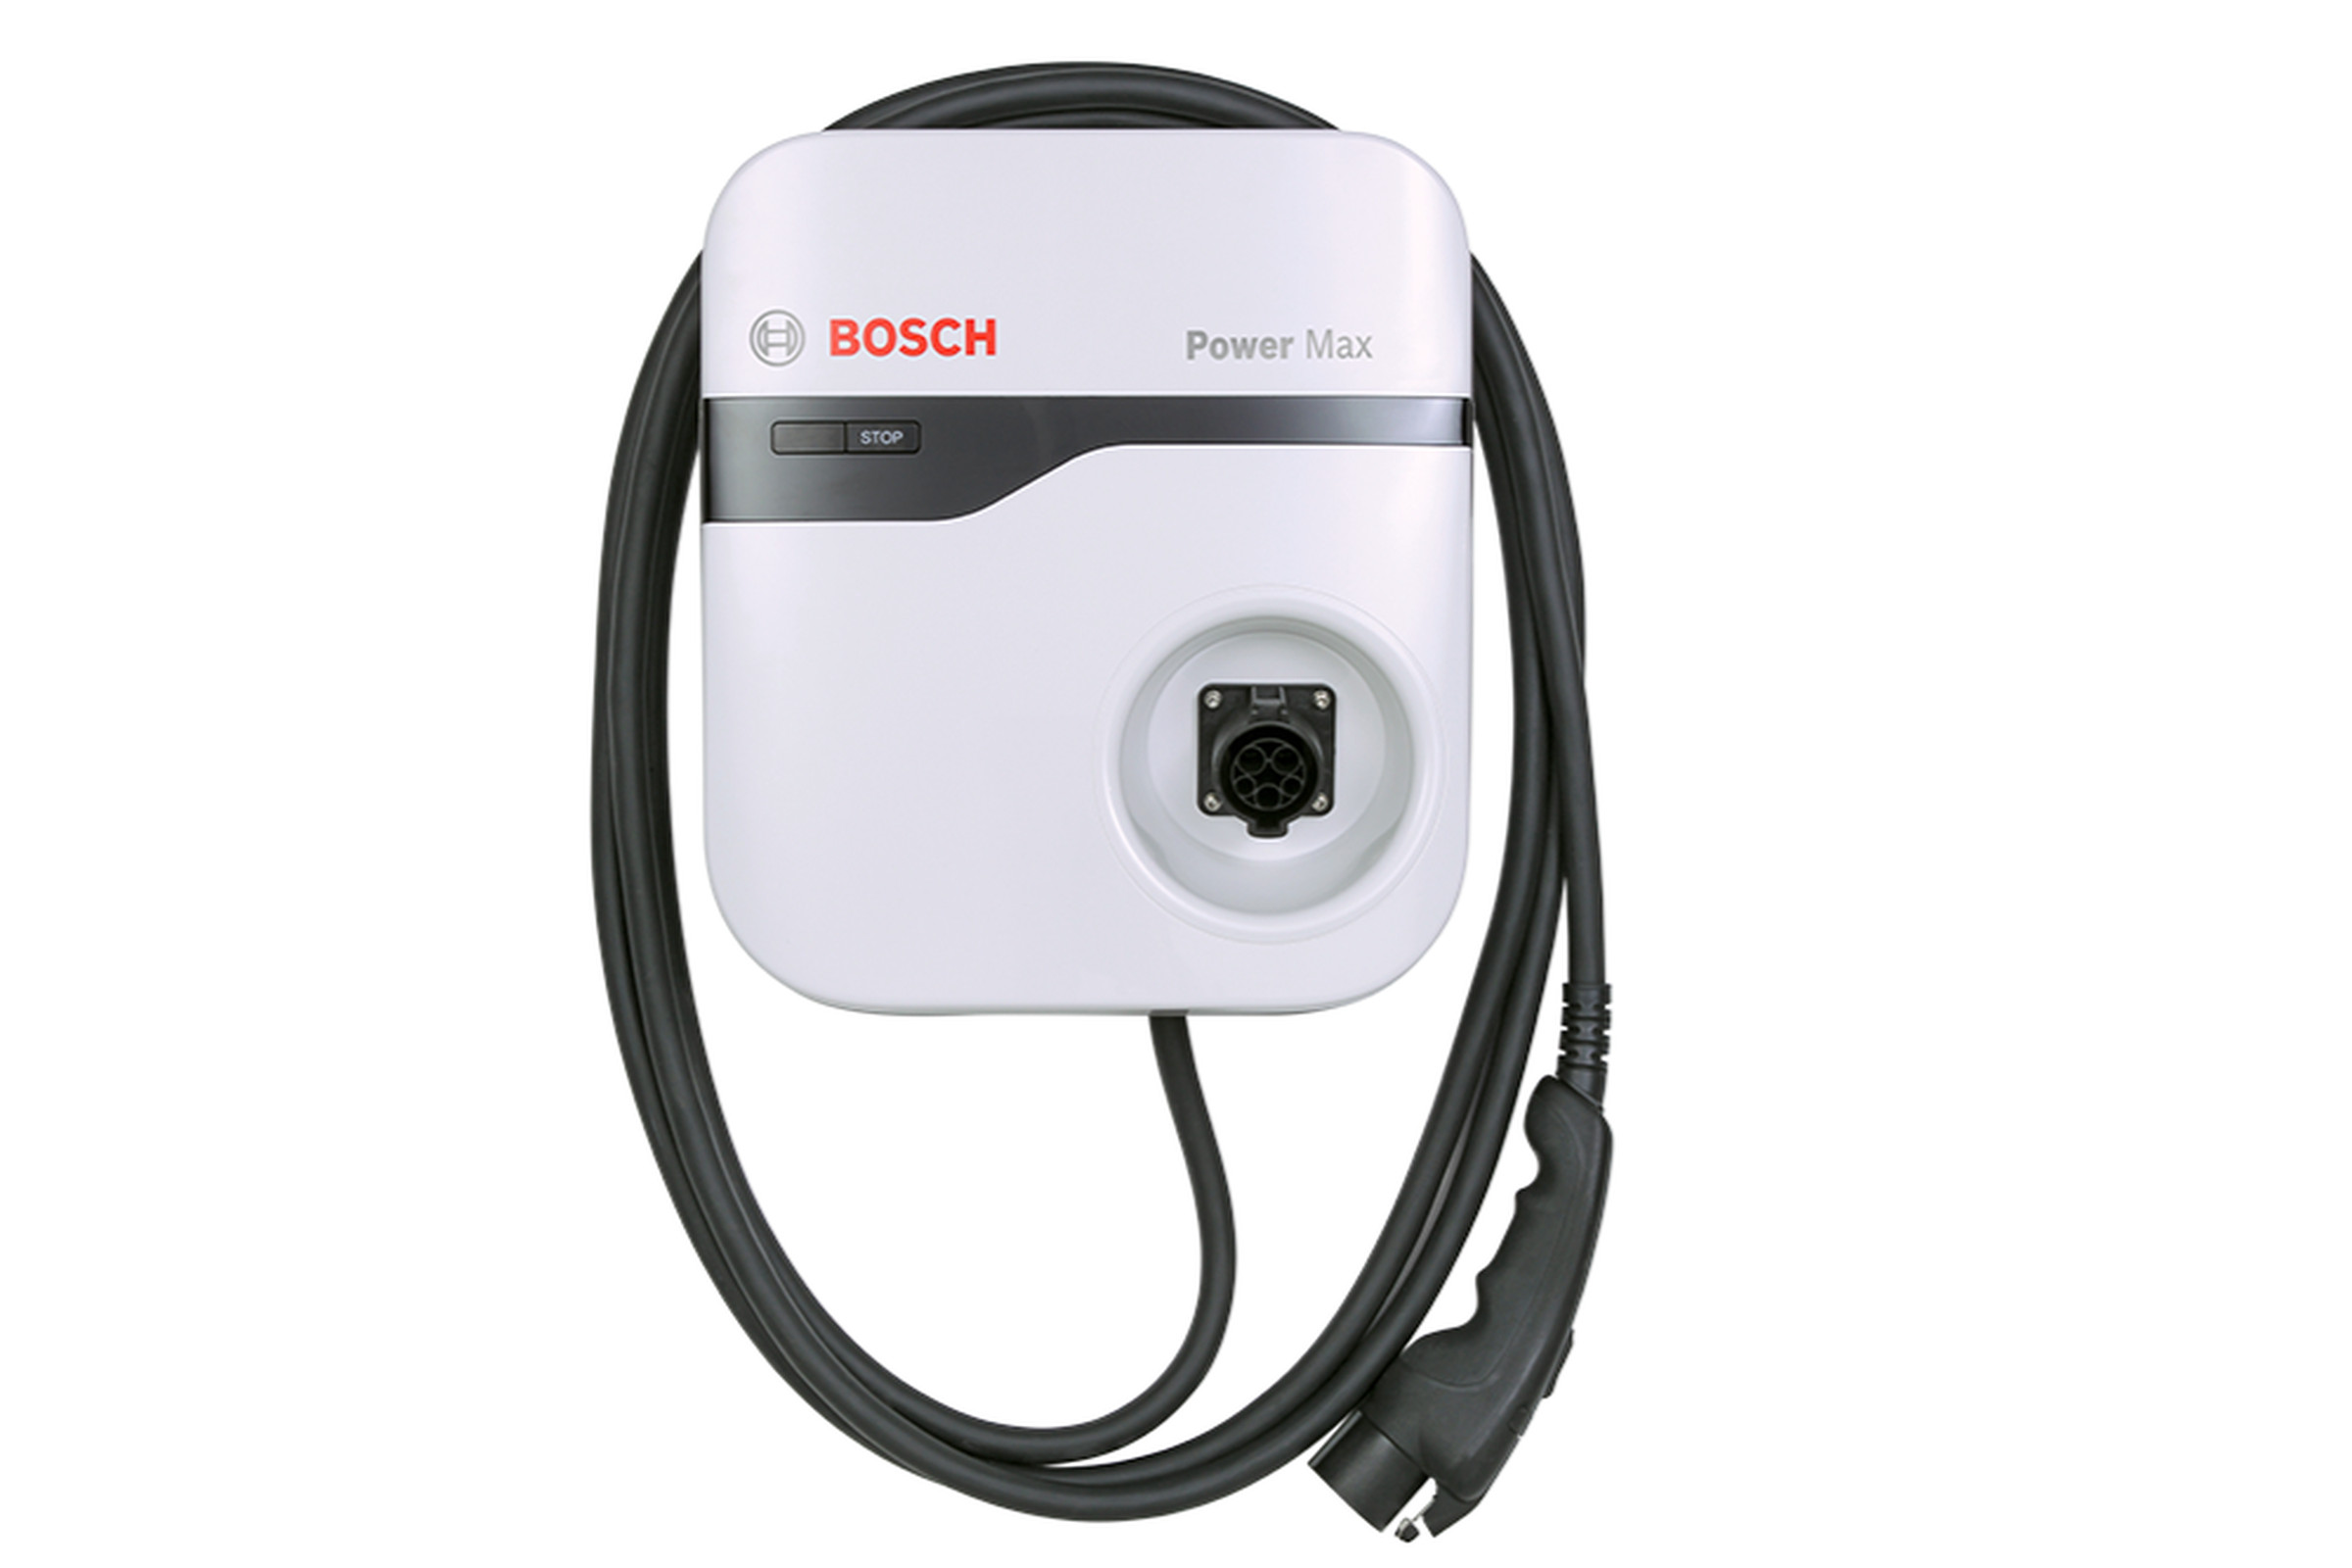 Bosch Power Max